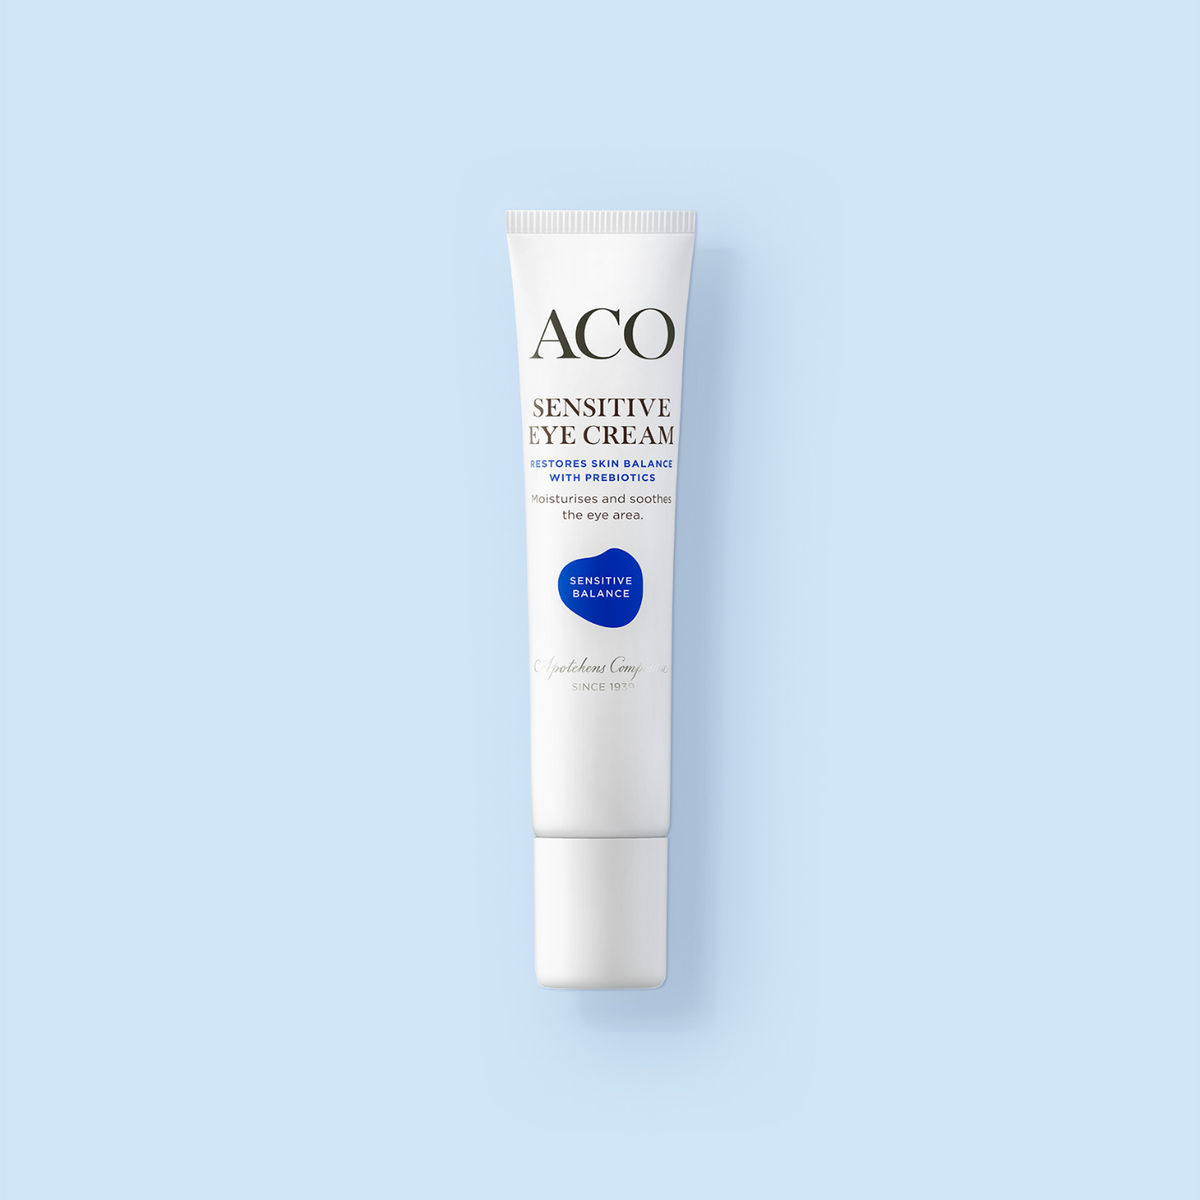 ACO Sensitive Balance Eye Cream